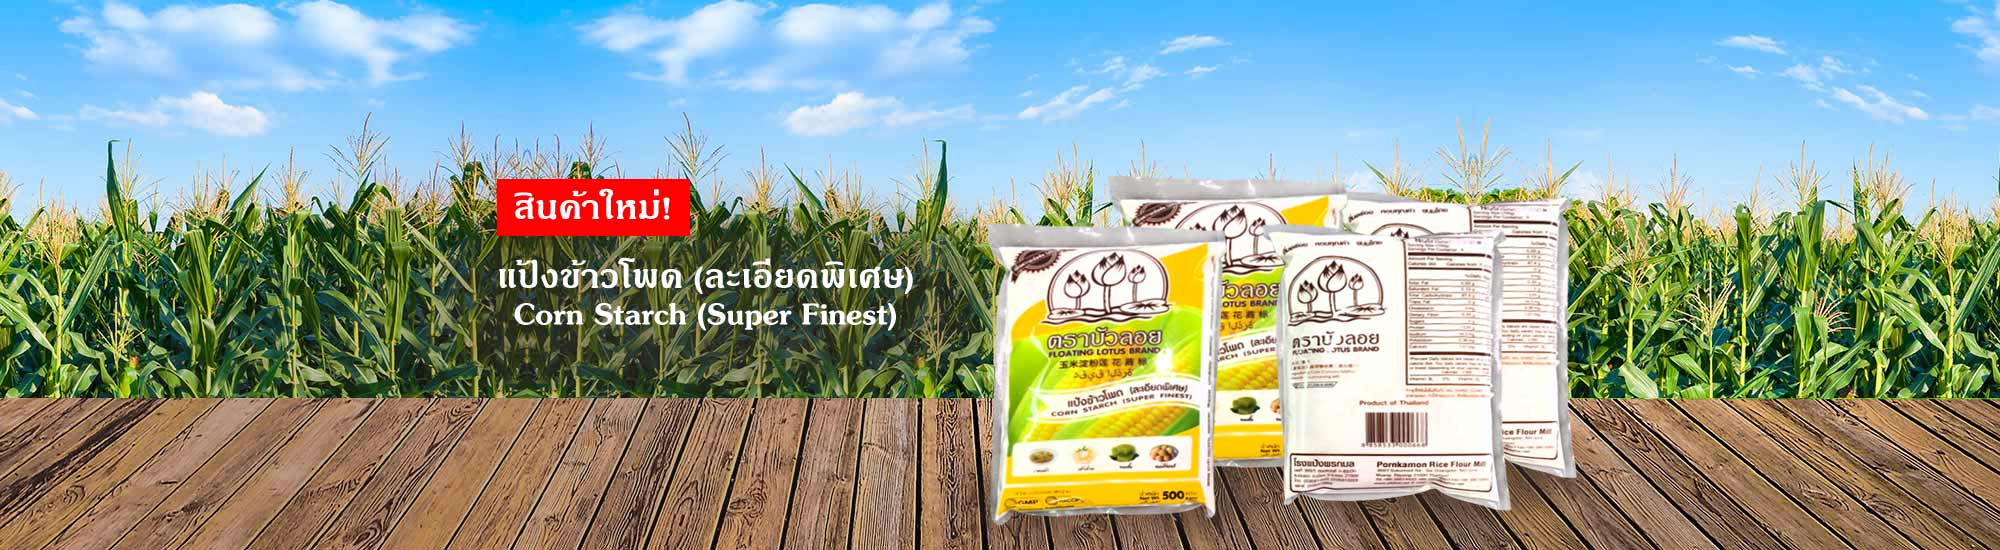 Thailand Glutinous rice flour, Thailand Tapioca Pearl, jasmine rice thailand